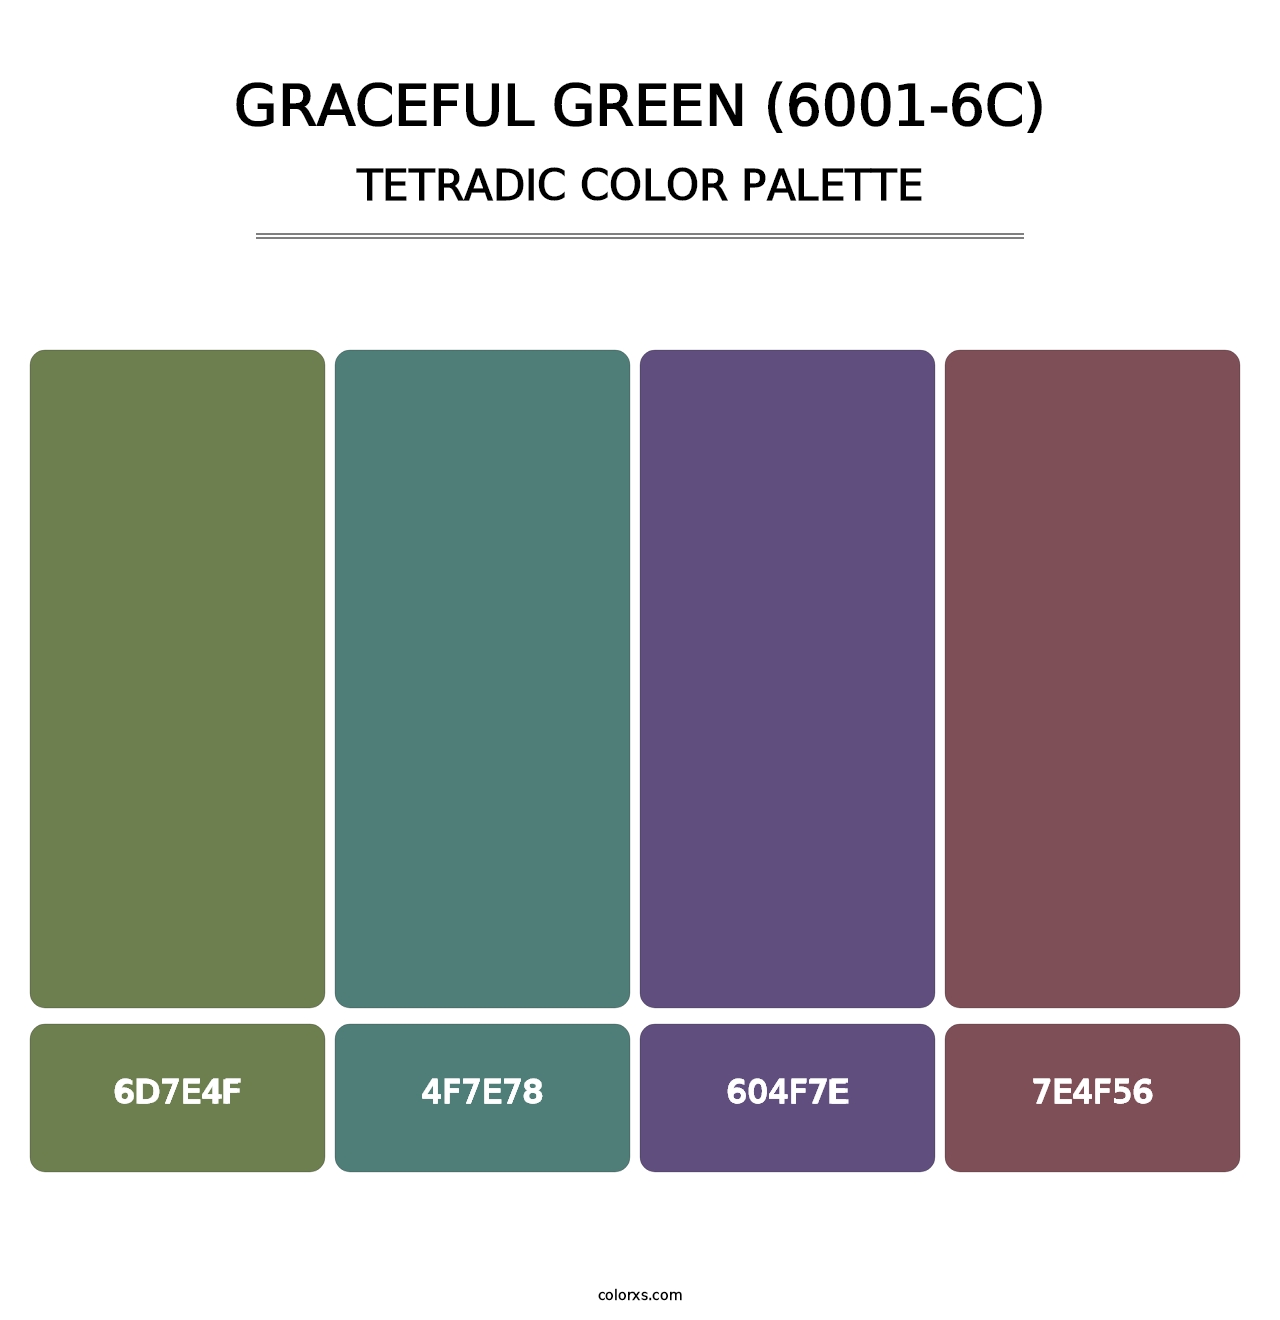 Graceful Green (6001-6C) - Tetradic Color Palette